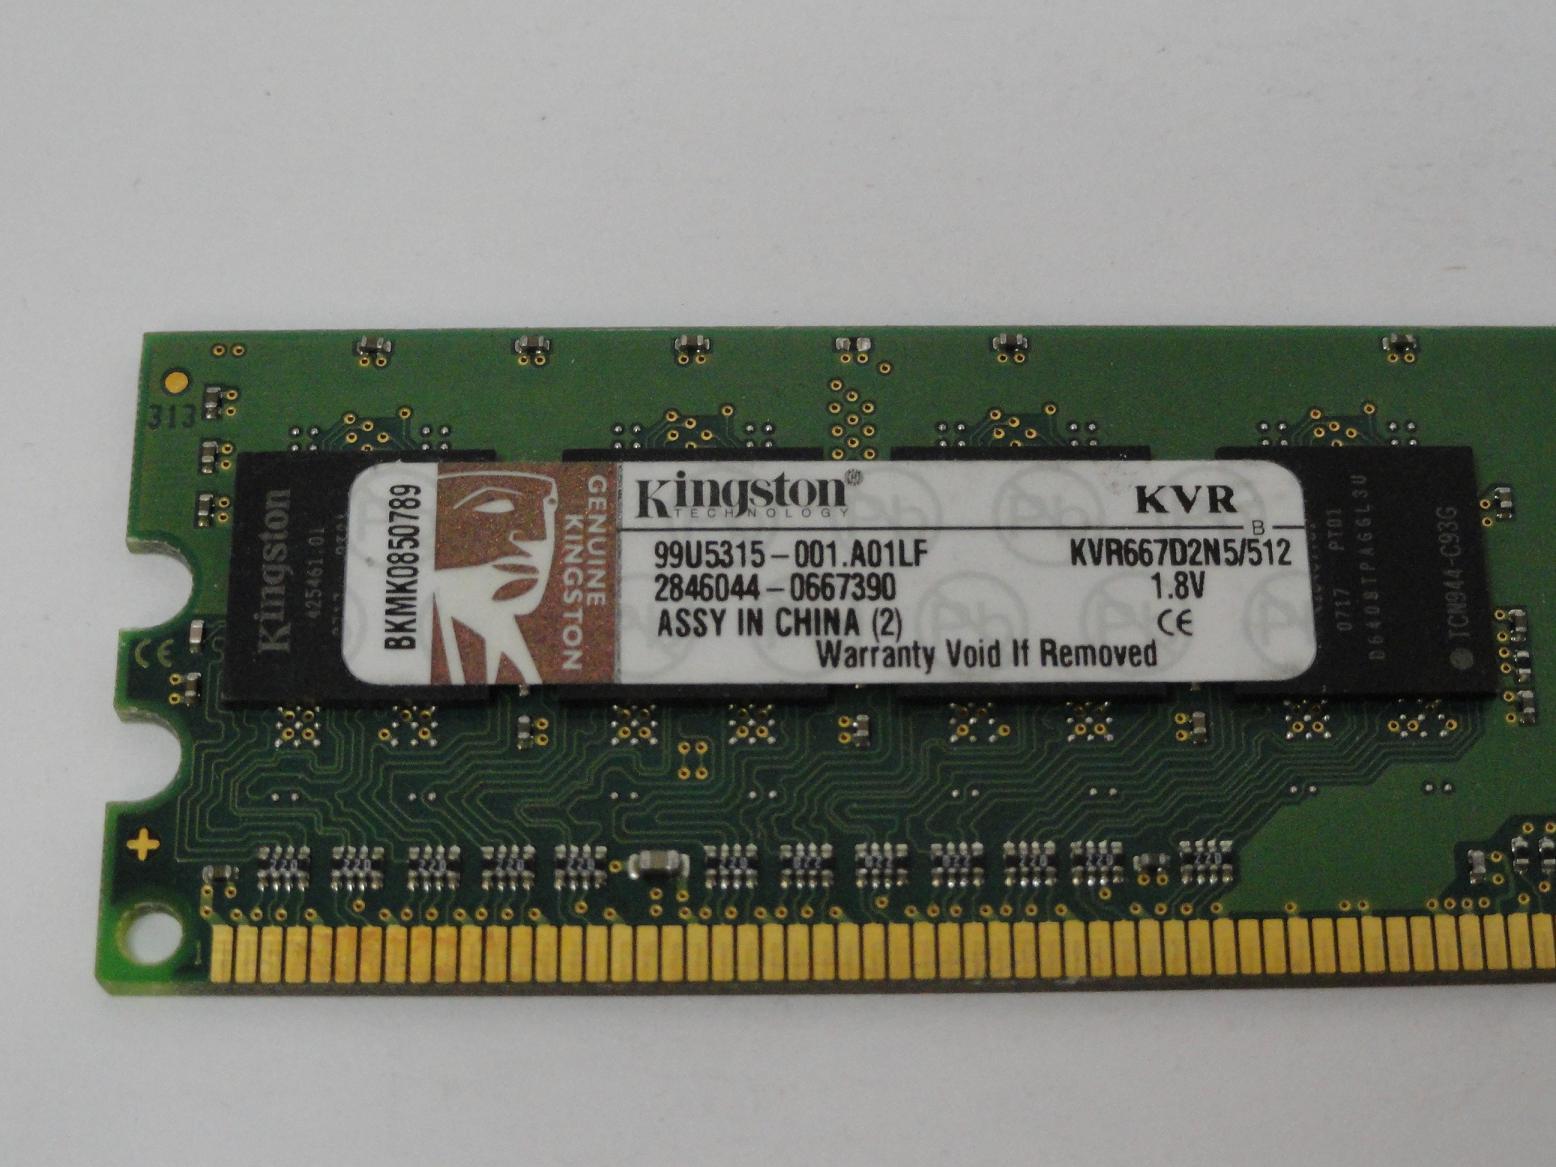 PR25352_99U5315-001.A01LF_Kingston 512MB PC2-5300 DDR2-667MHz DIMM RAM - Image3